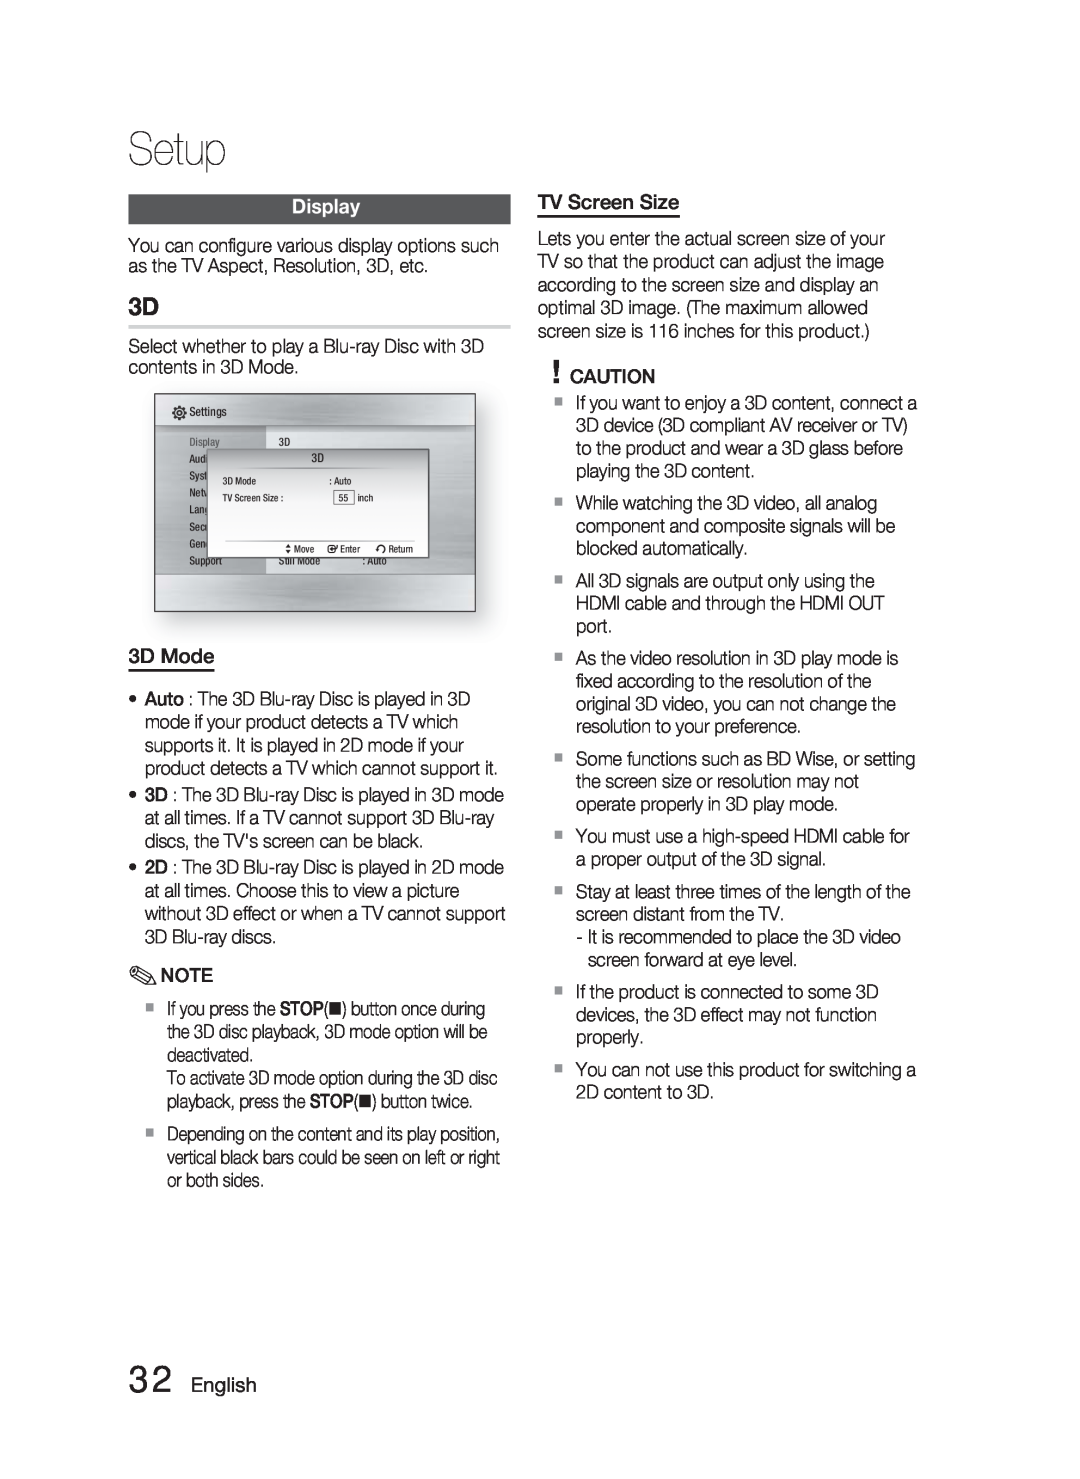 Samsung AH68-02279R user manual Display, 3D Mode, TV Screen Size, English, Setup 